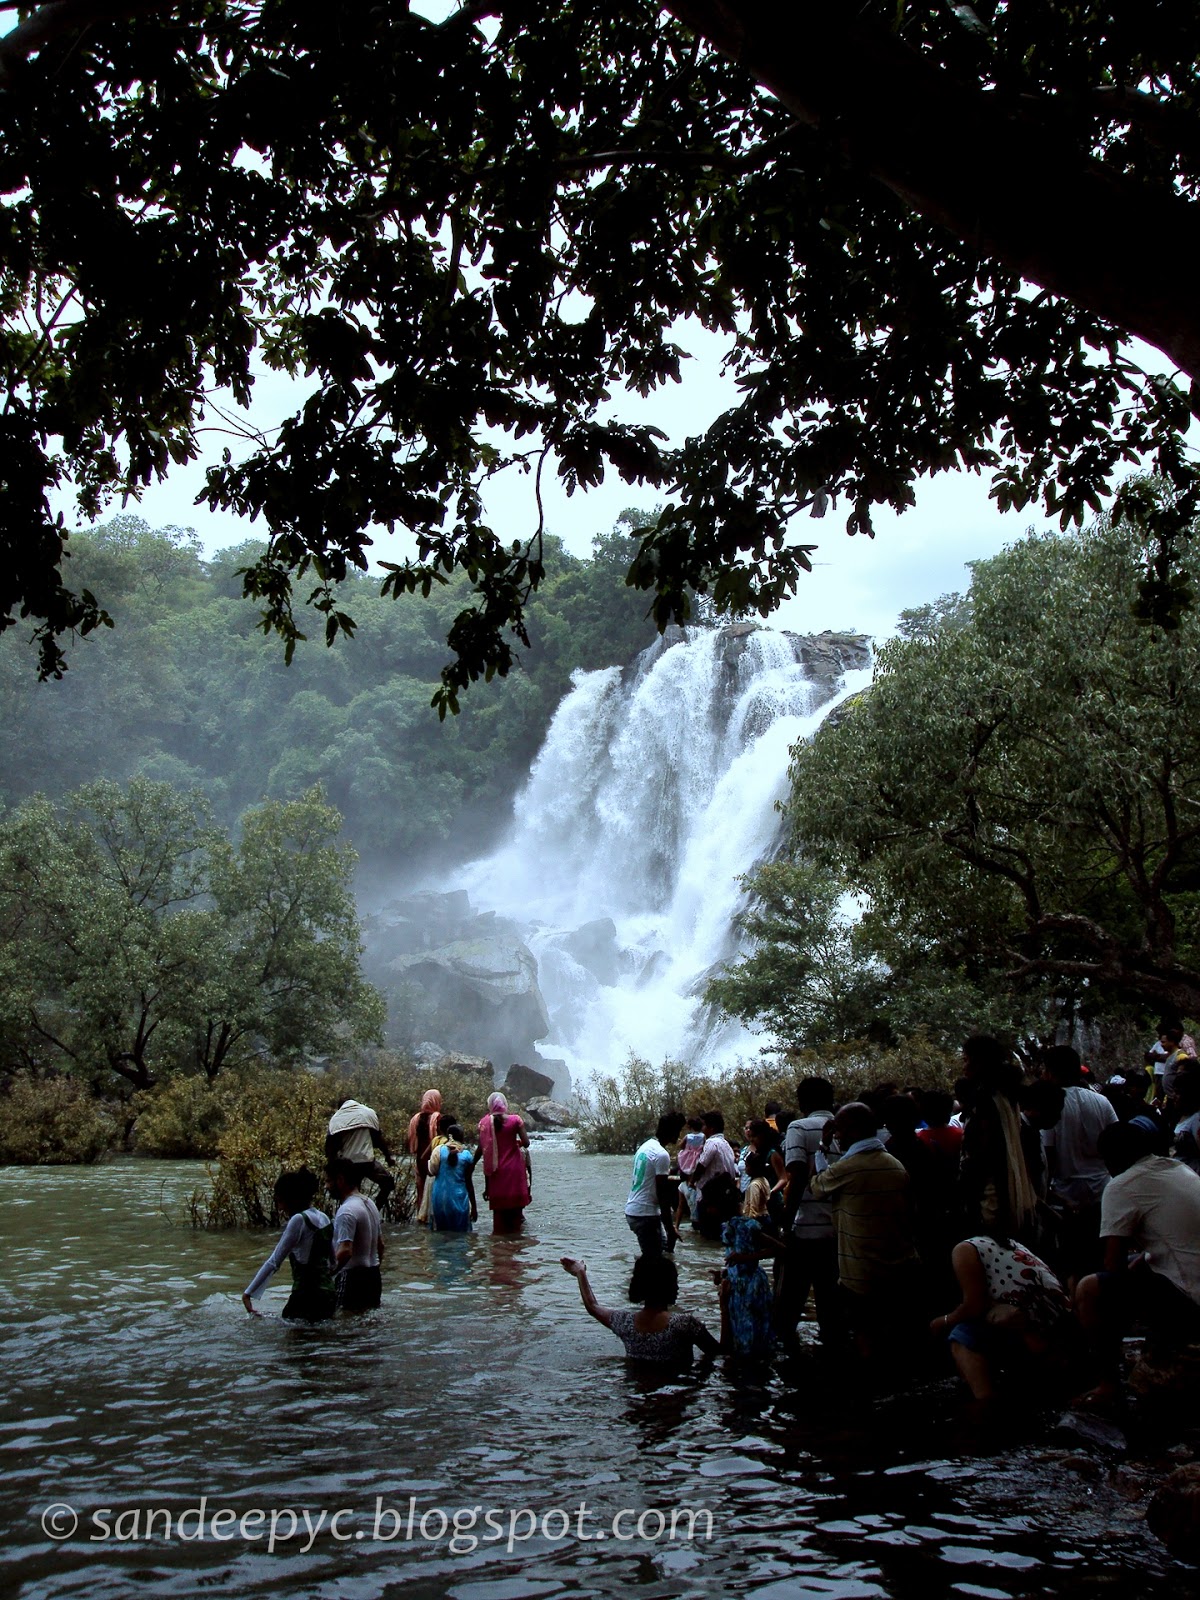 Bharachukki falls